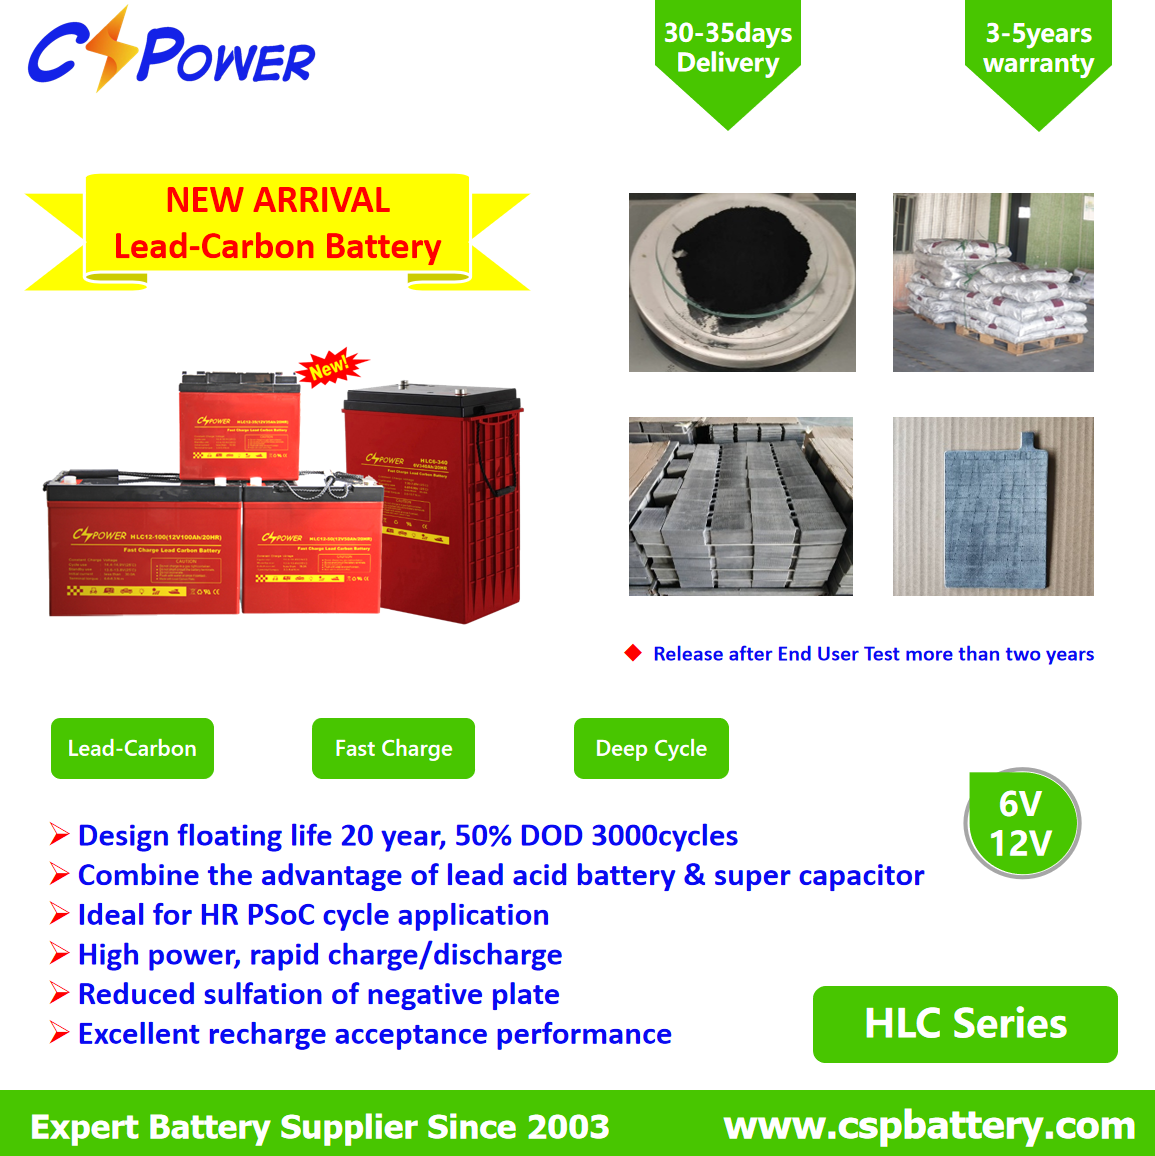 CSPower Lead Carbon Battery Technology & Advantage